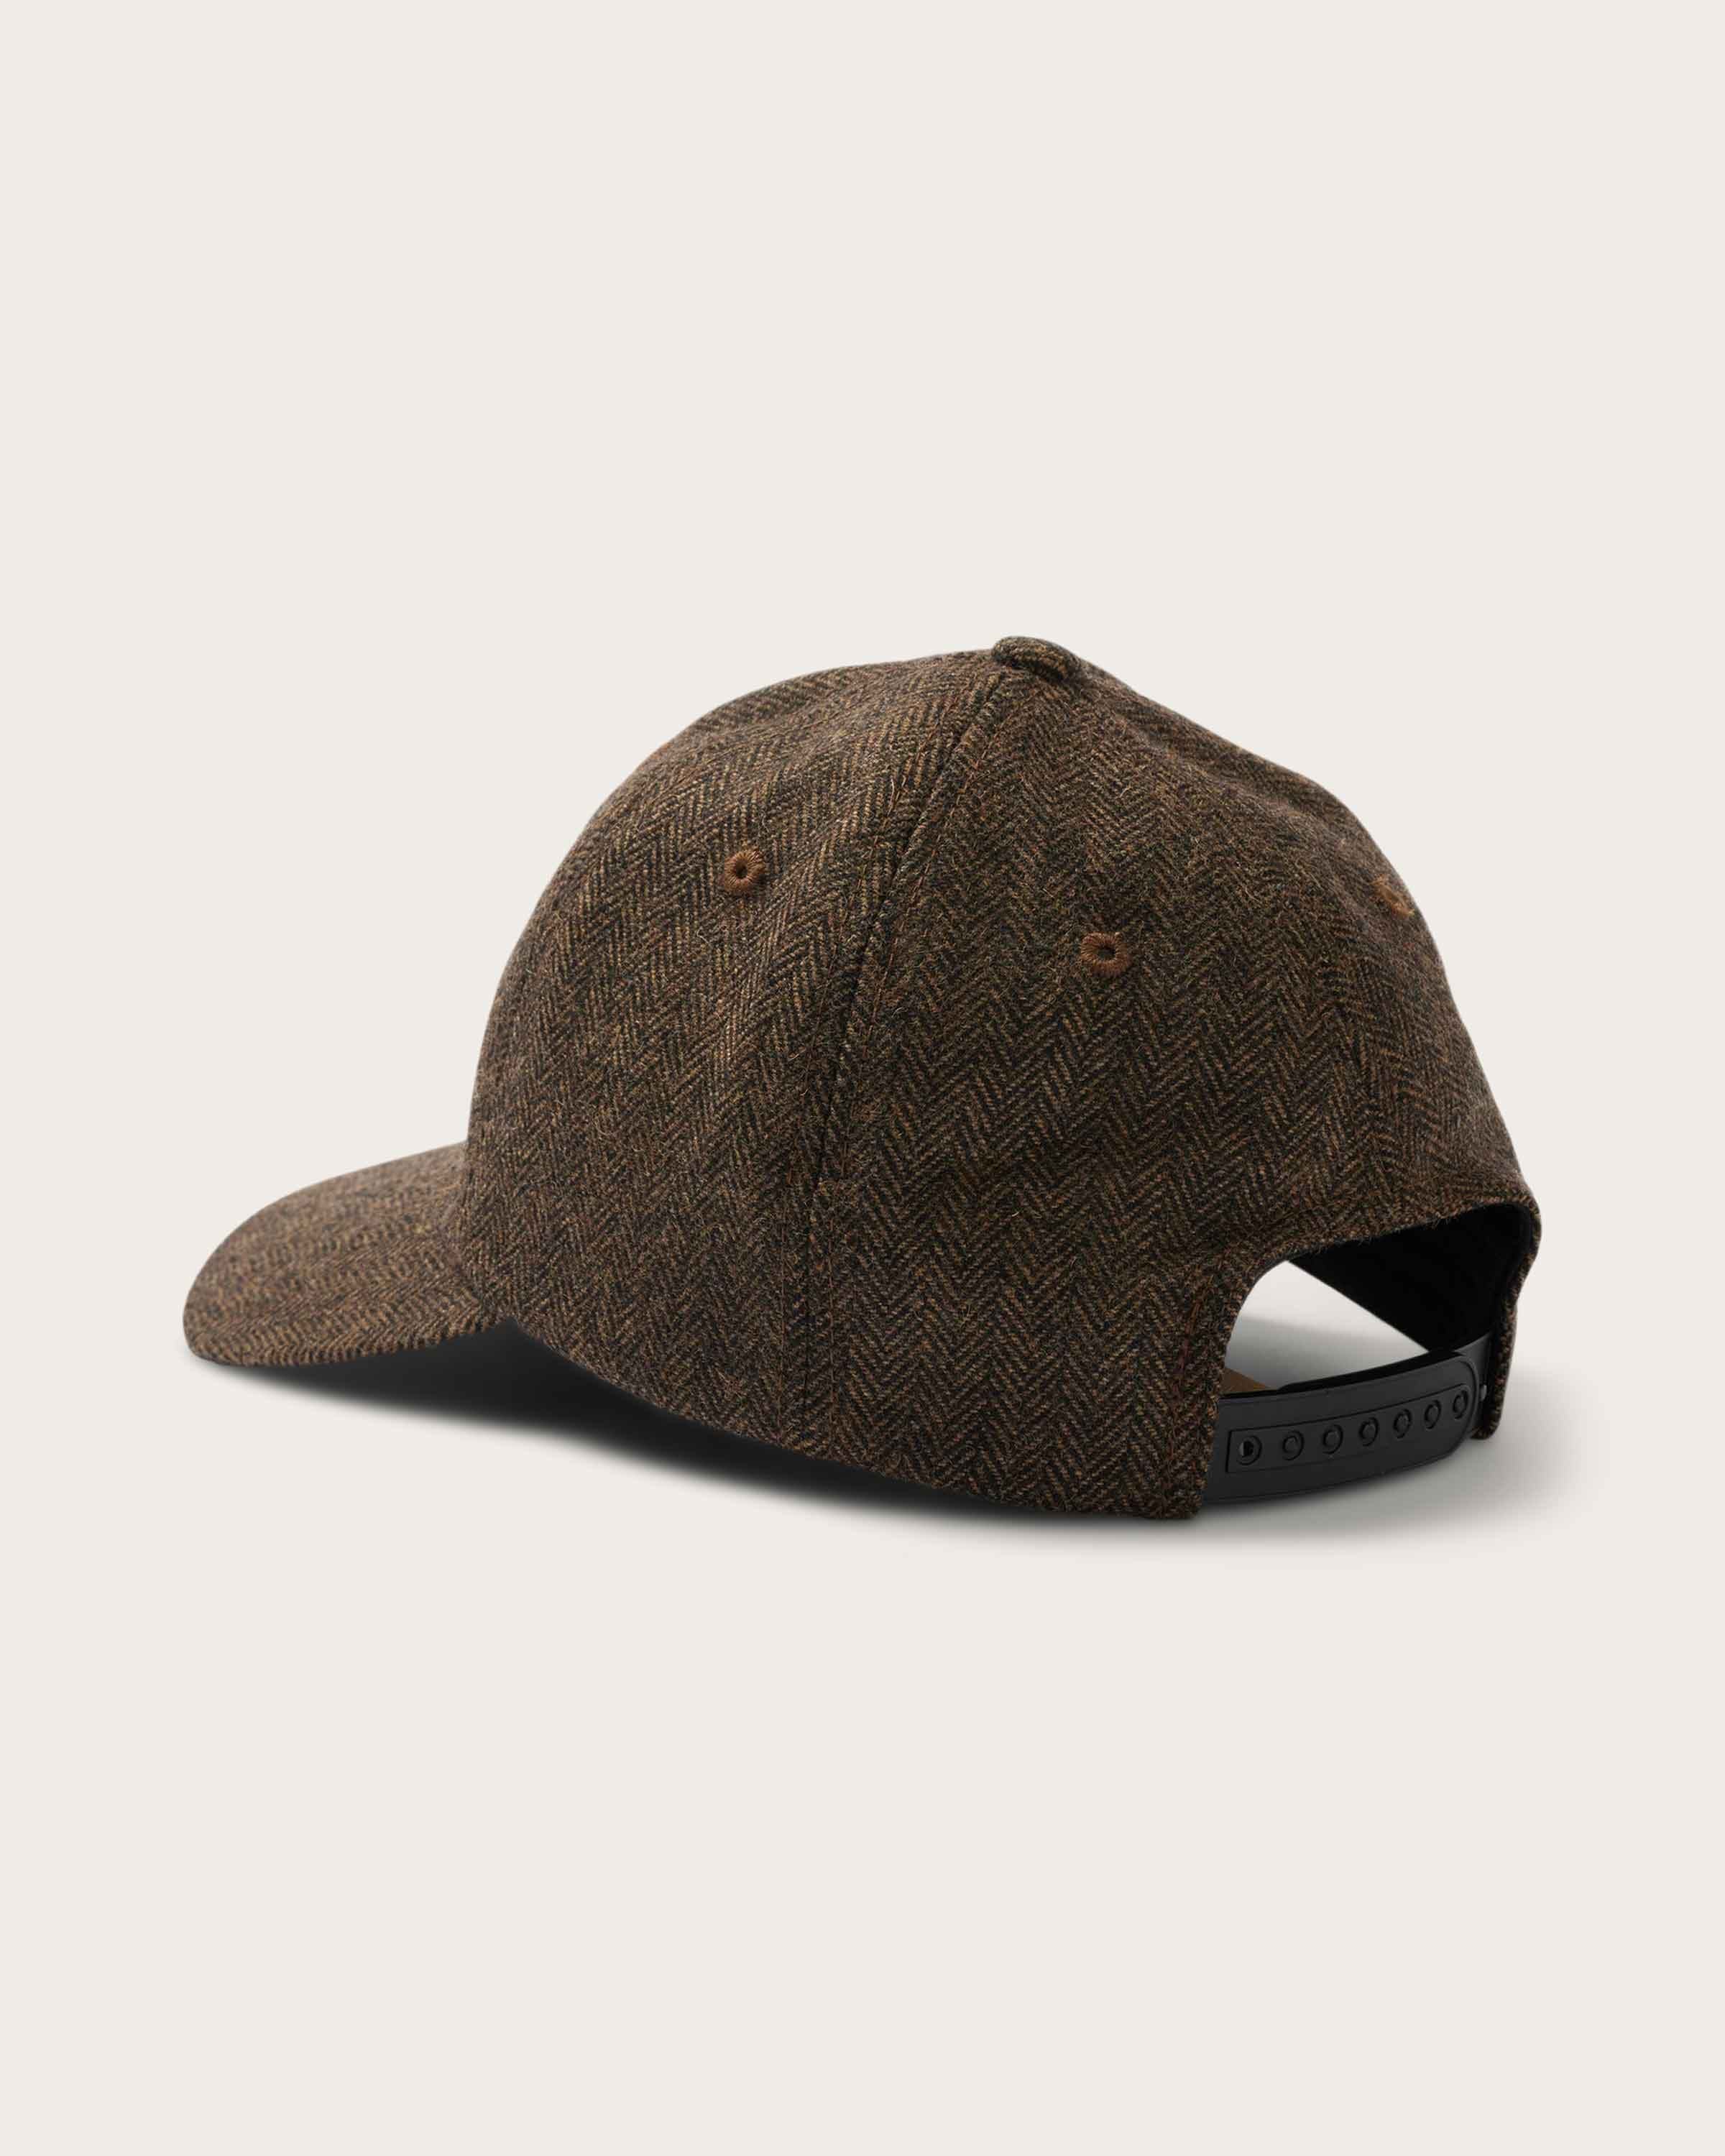 Bristol Cap in Brown & Black - undefined - Hemlock Hat Co. Ball Caps